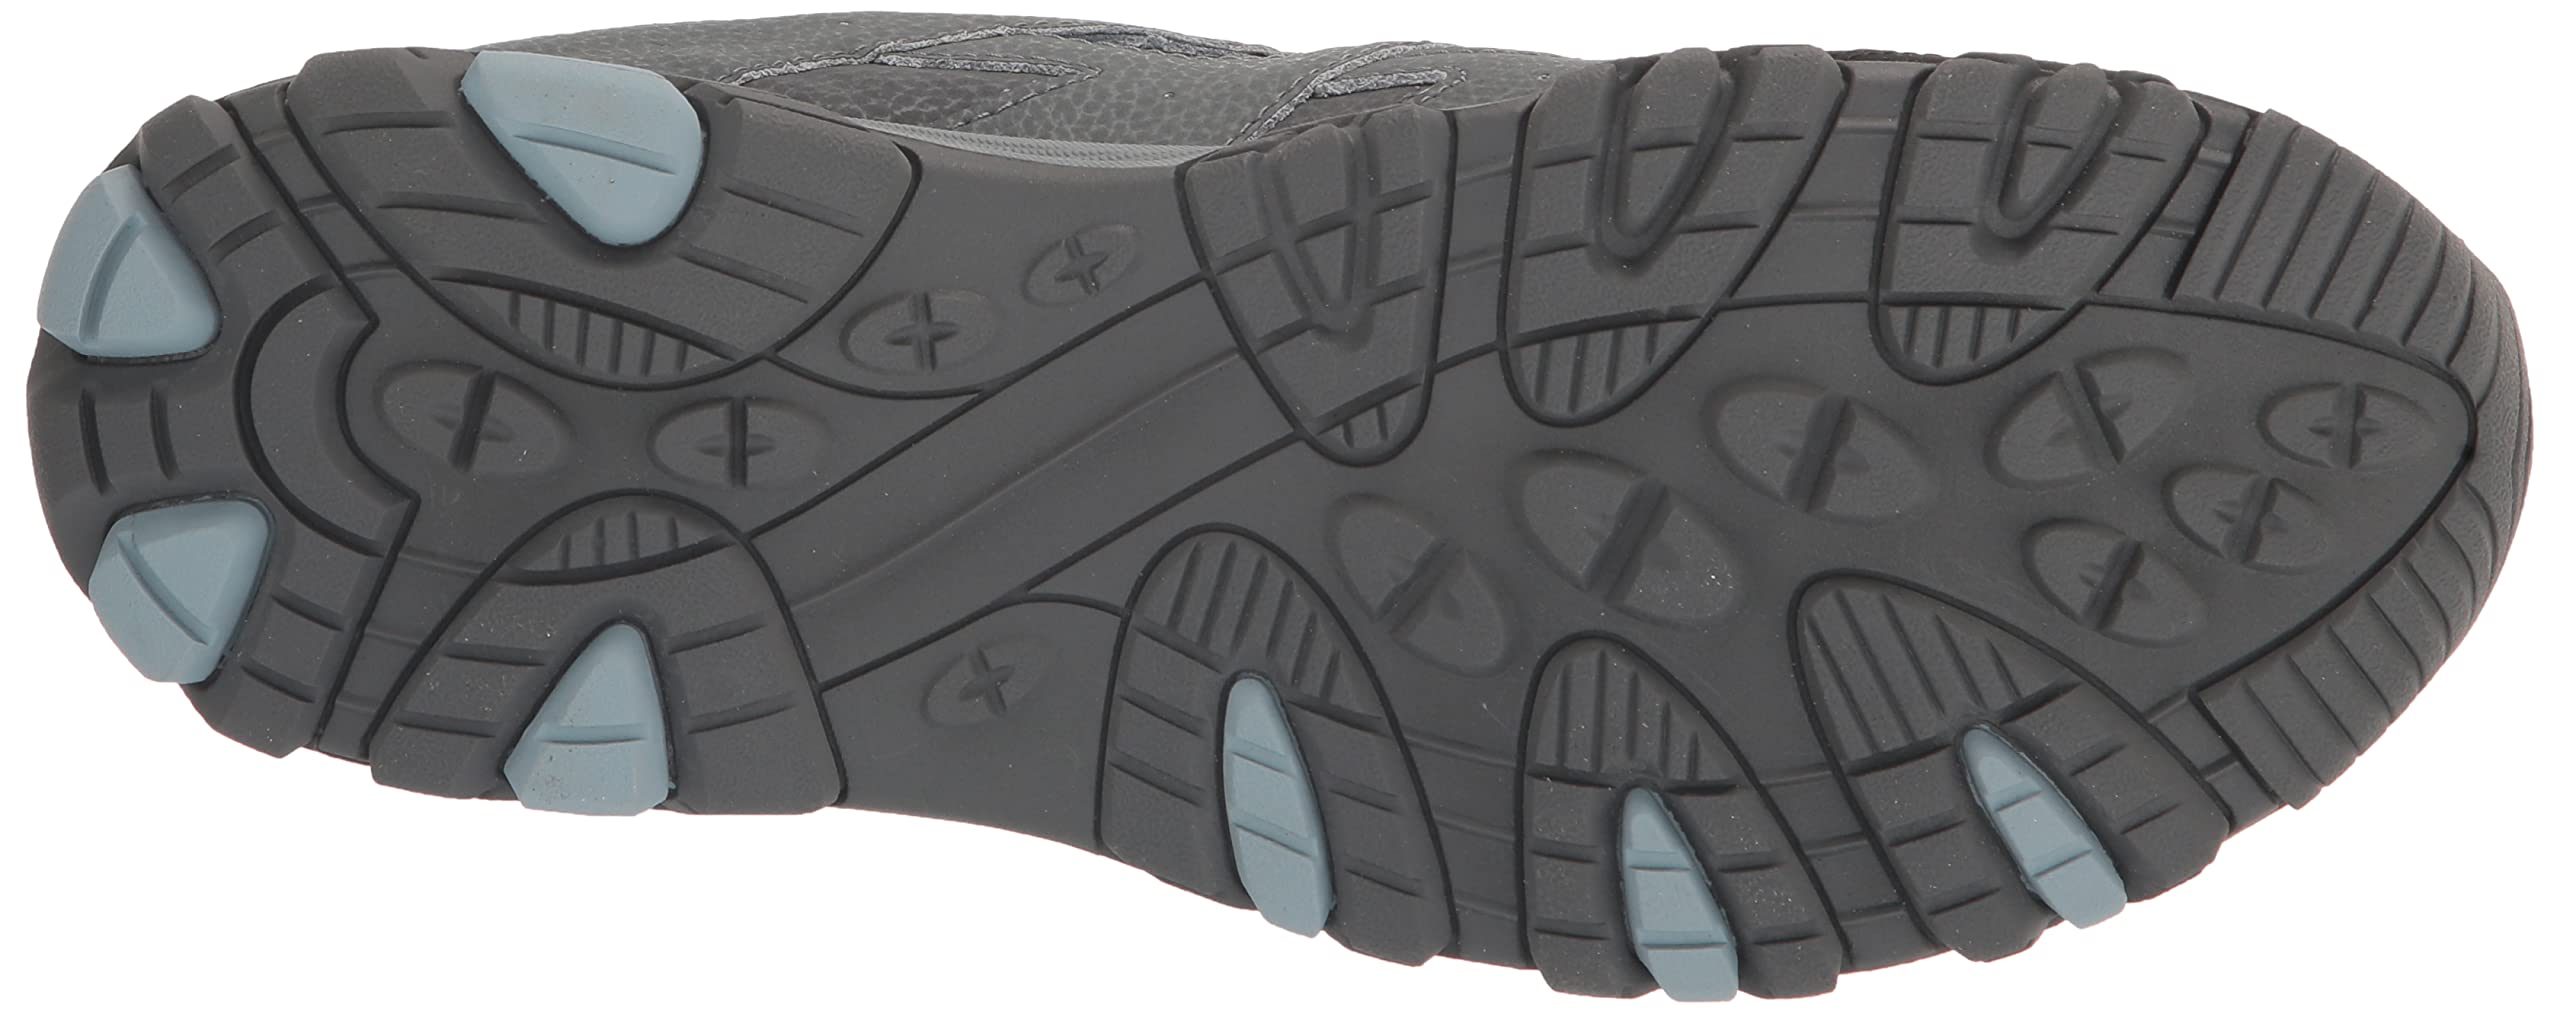 Merrell Unisex-Child Moab 3 Low Waterproof Hiking Shoe